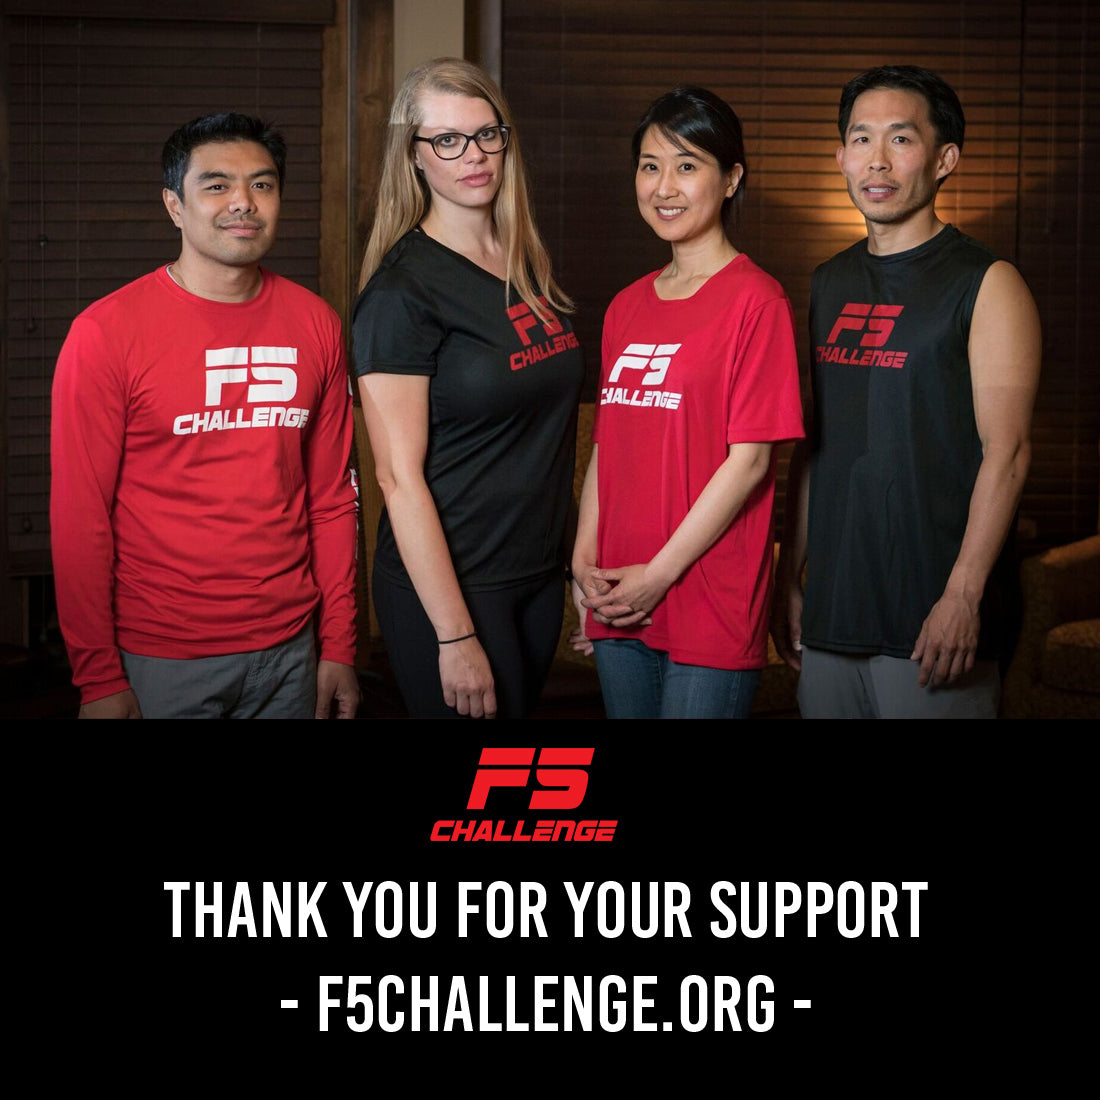 F5 Challenge Performance V-Neck Ladies Shirt